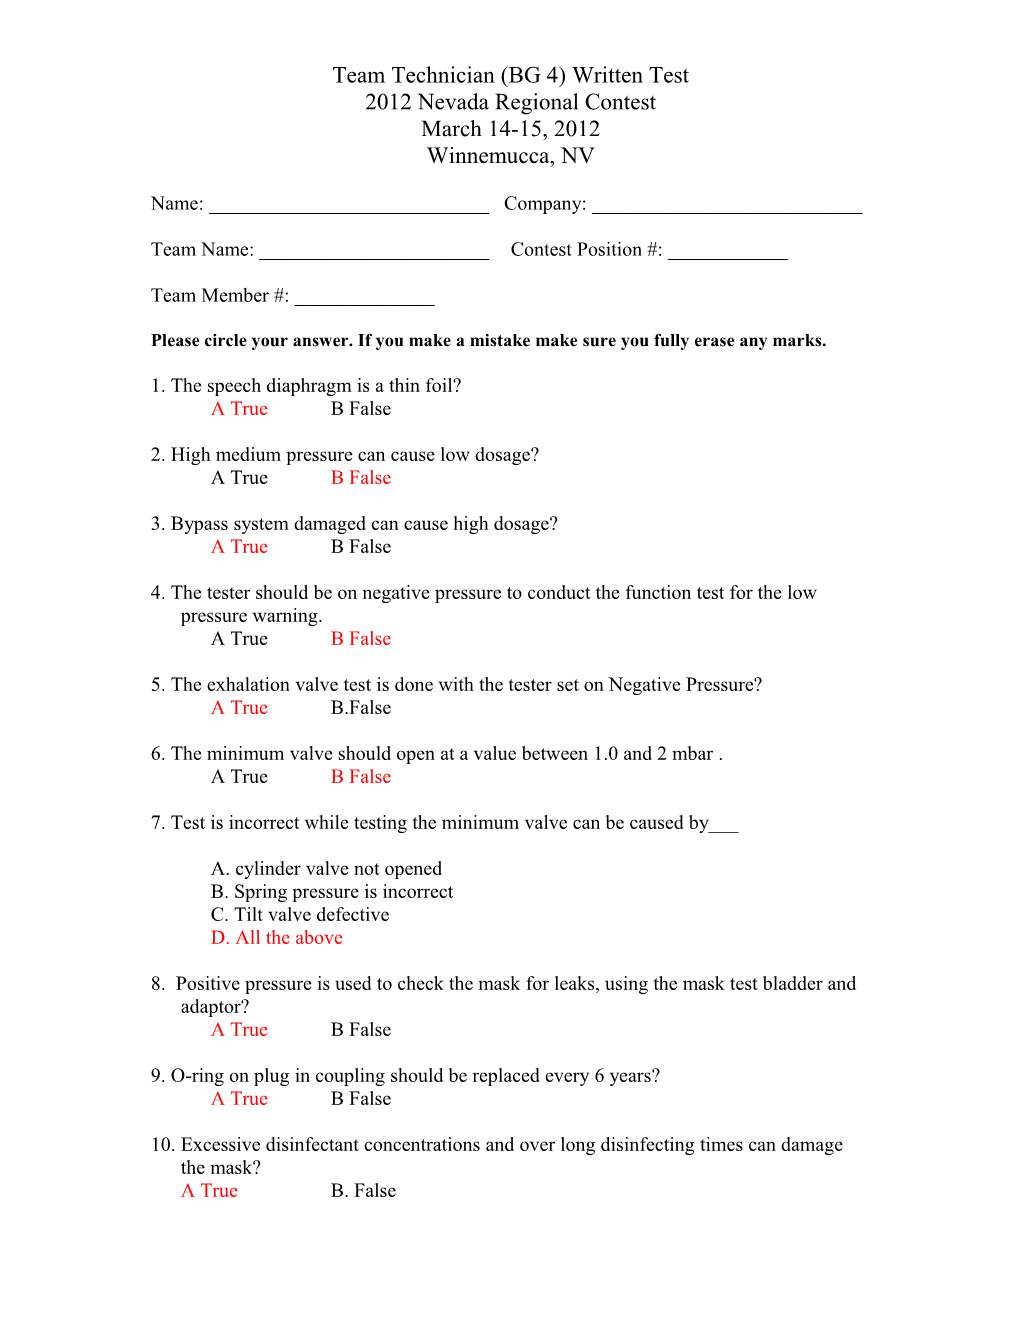 BG 4 Test Questions 1